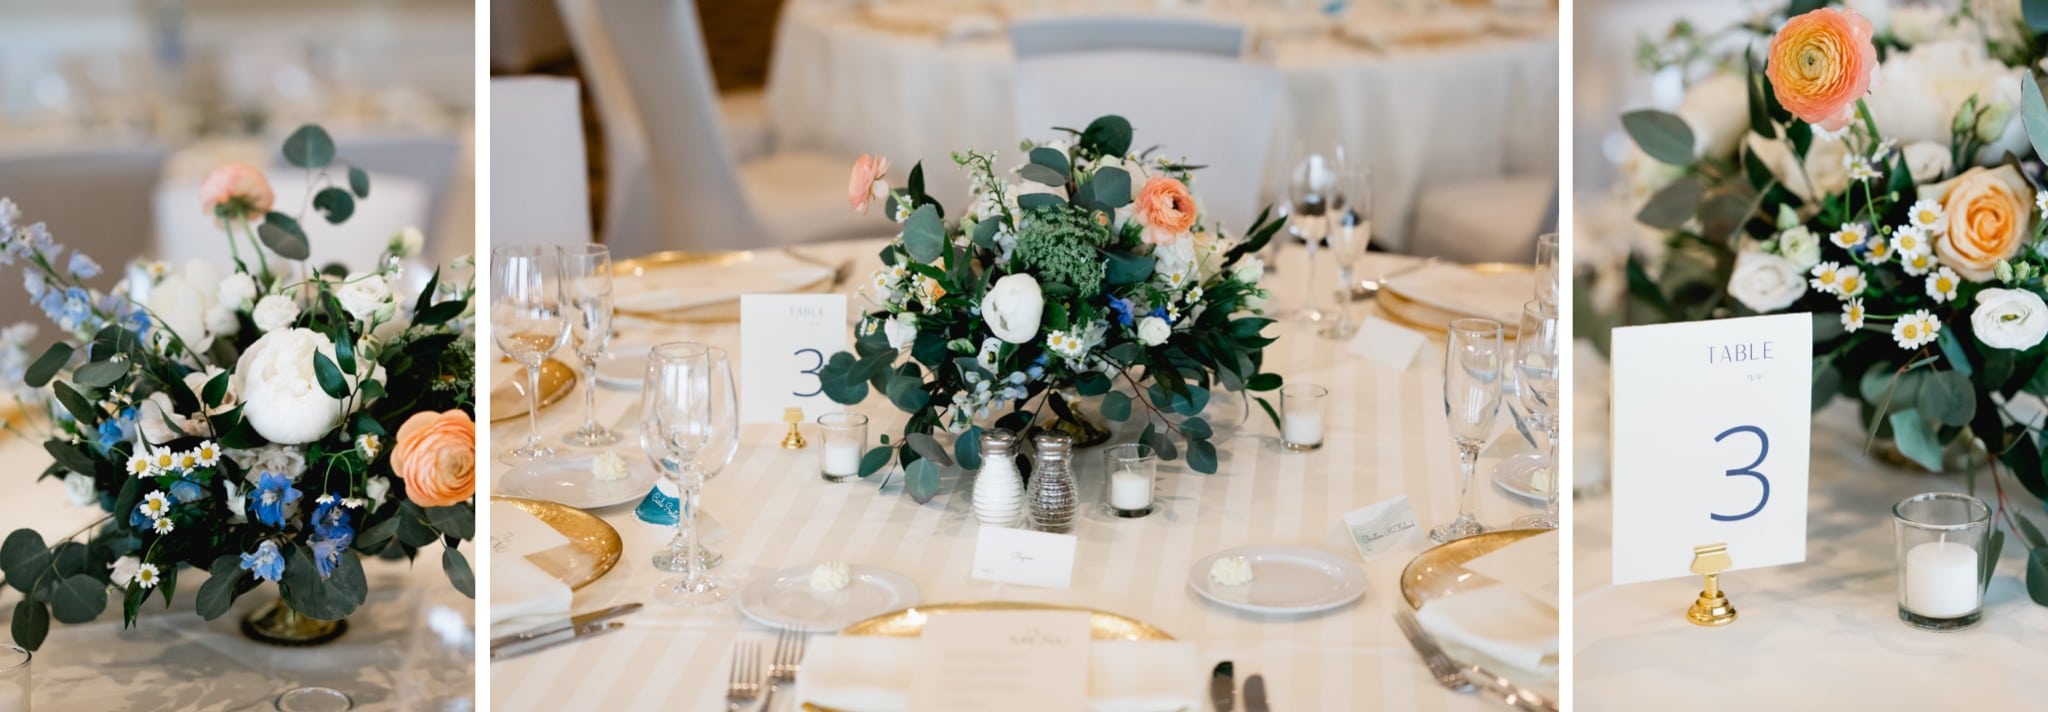 wedding reception detail photos at glen oaks country club